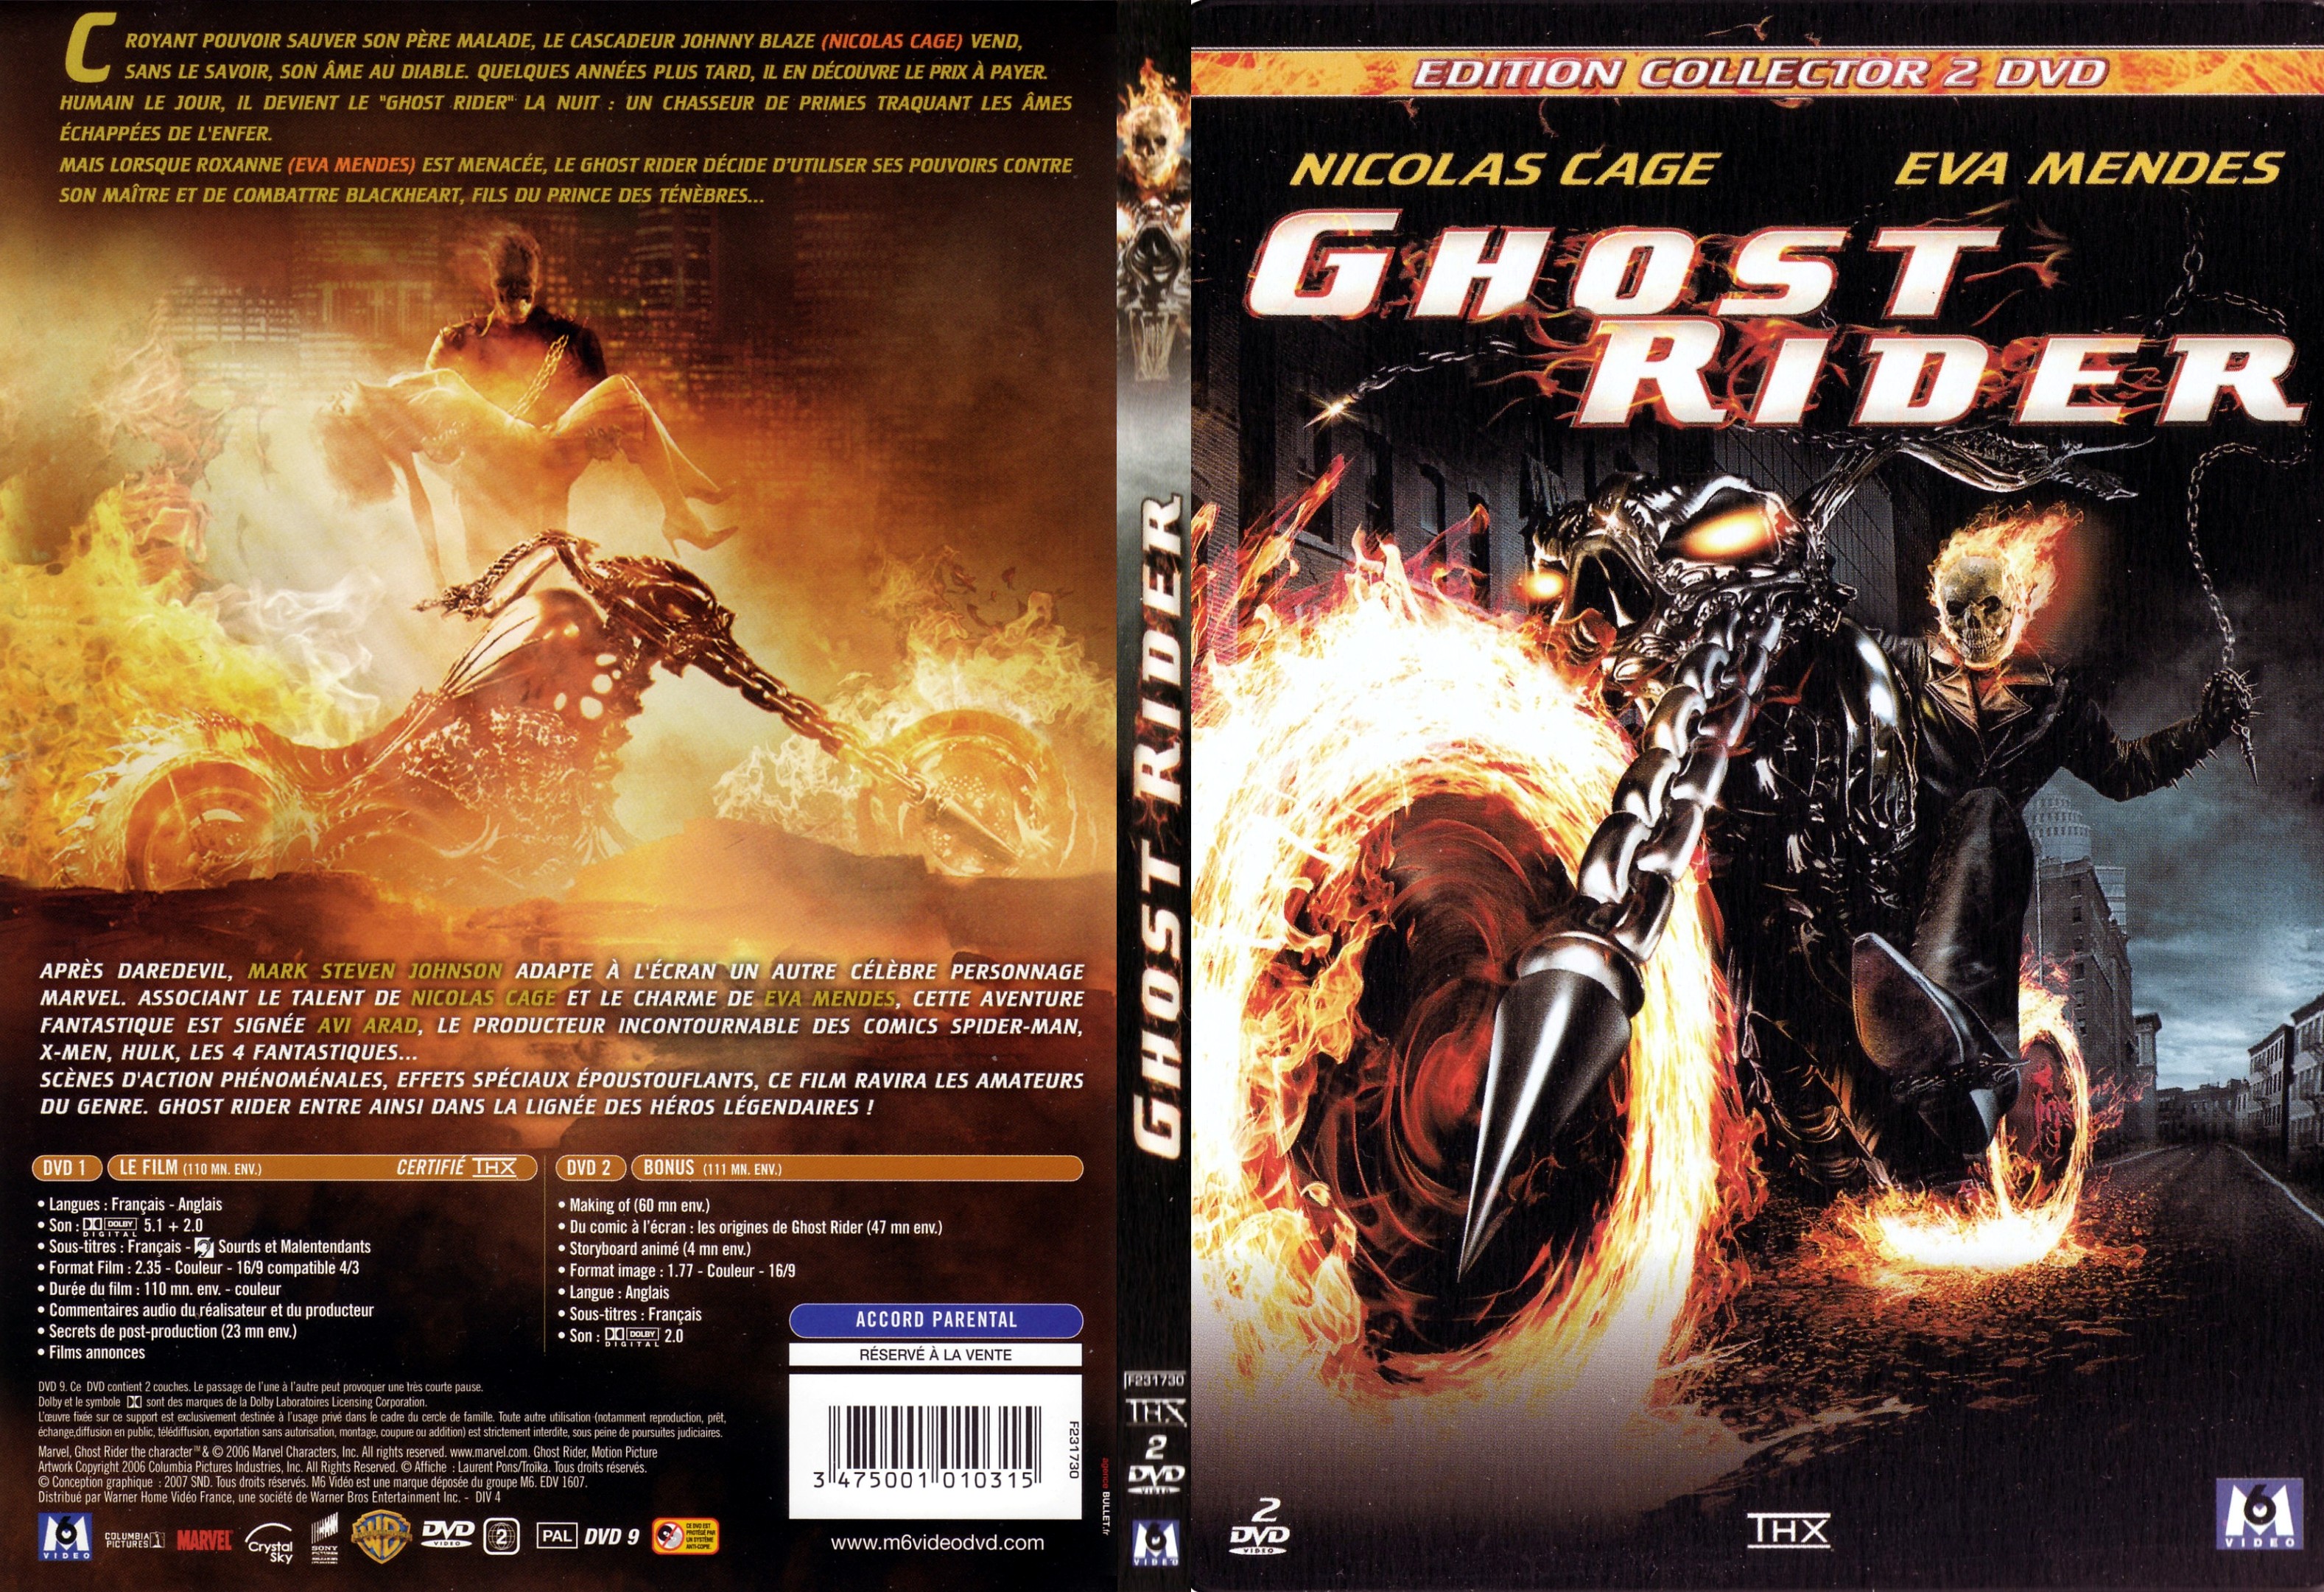 Jaquette DVD Ghost rider - SLIM v2